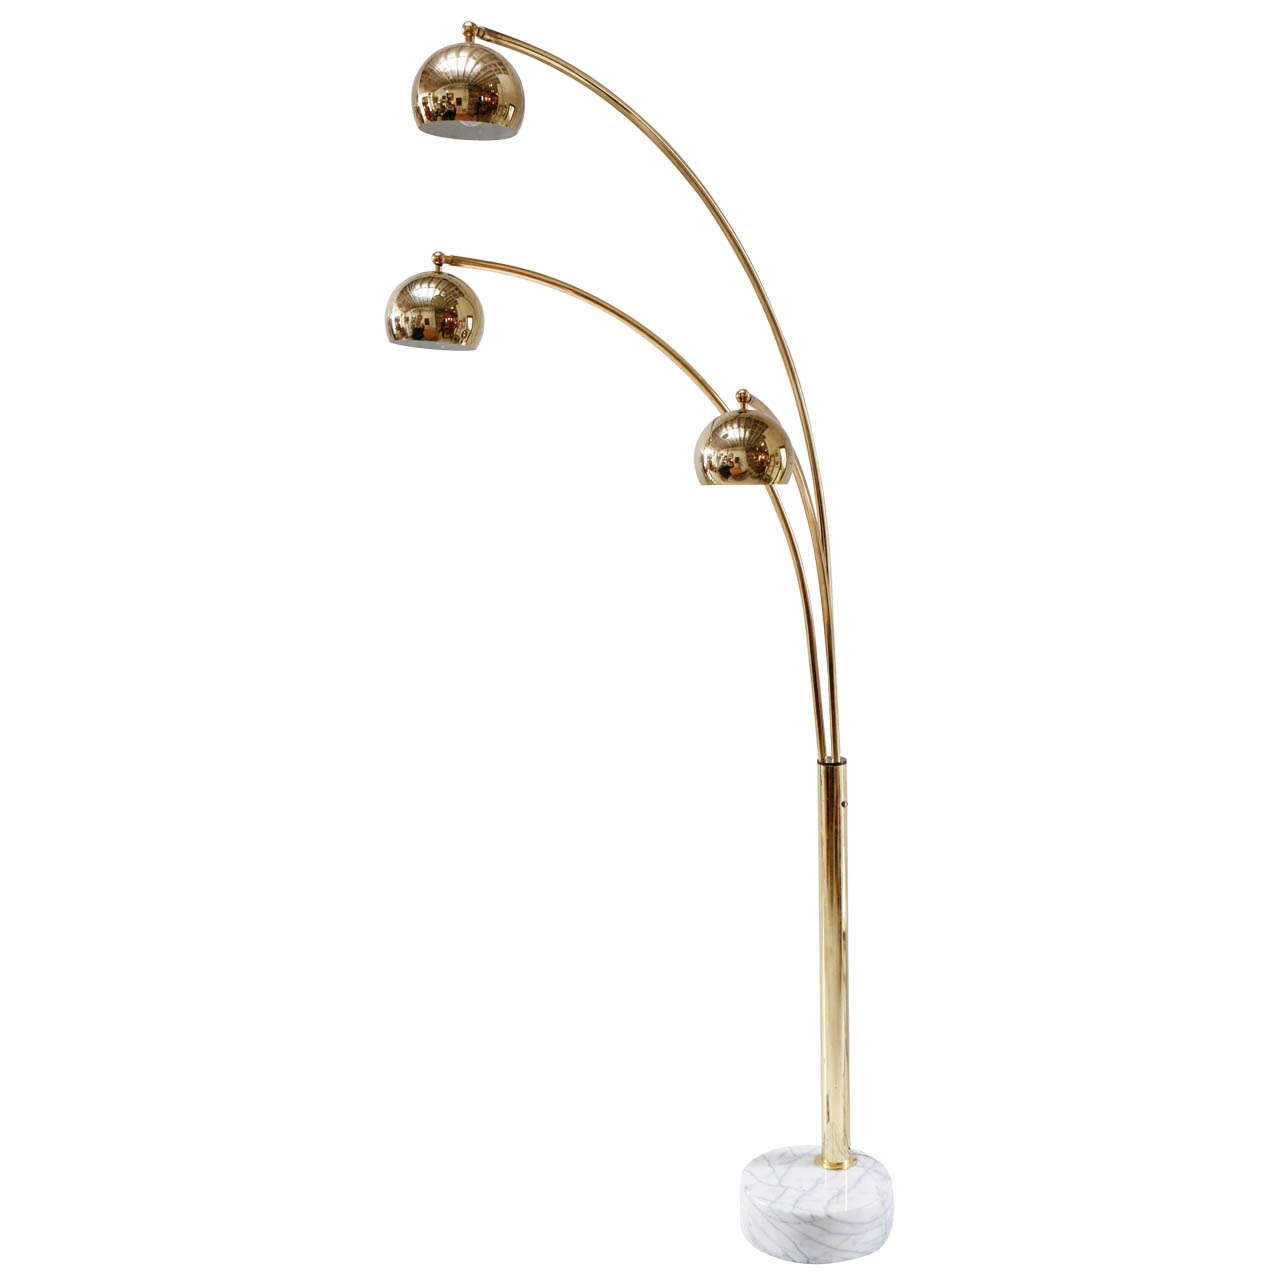 Vintage Brass and Marble Three Arm Arc Floor Lamp